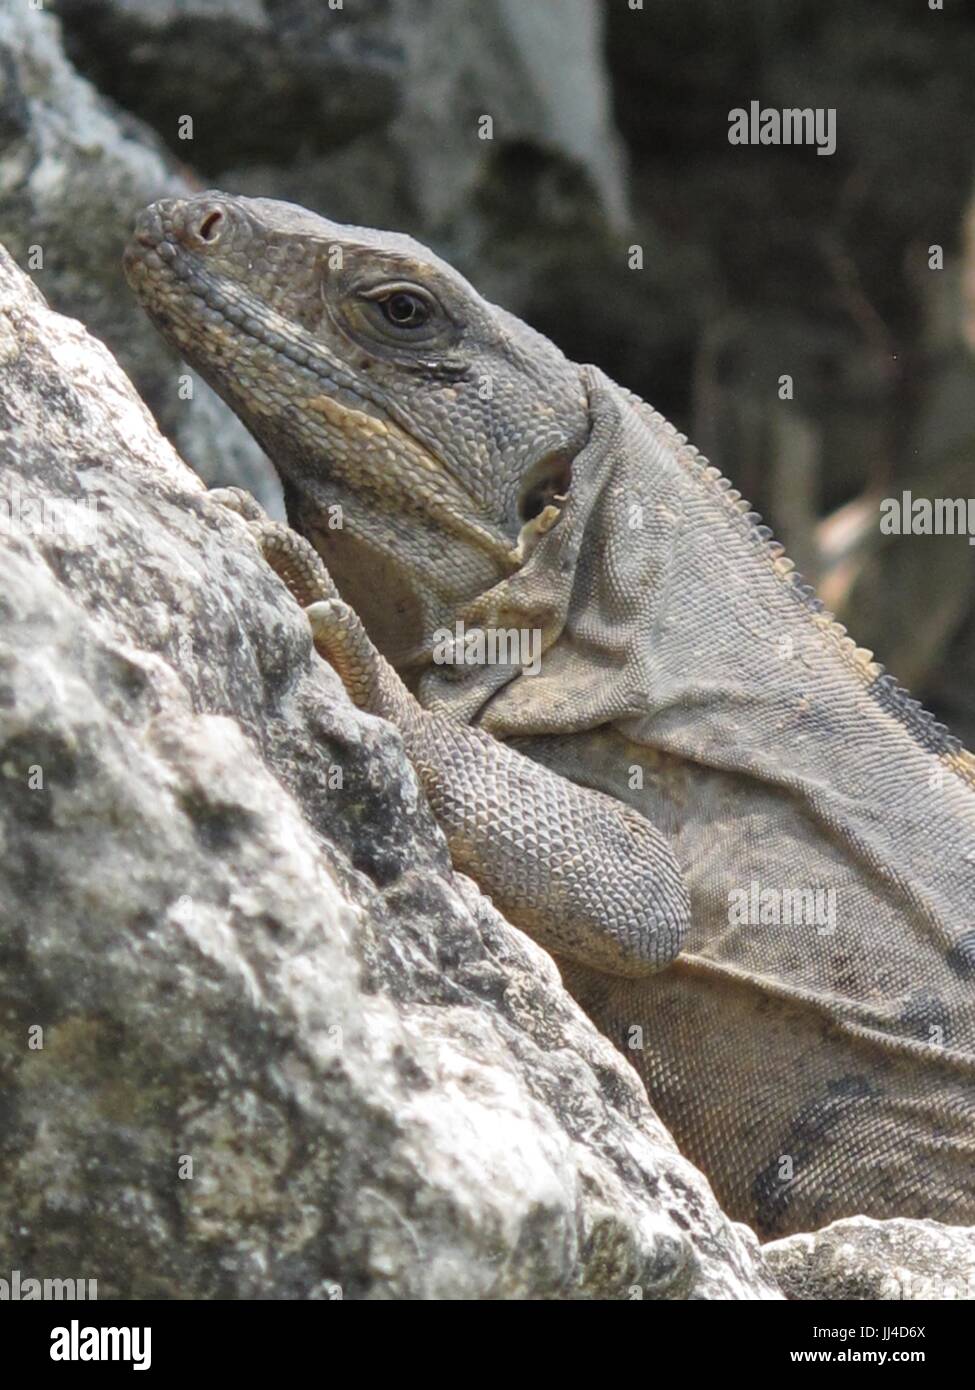 Iguana sunning himself on a rock Stock Photo